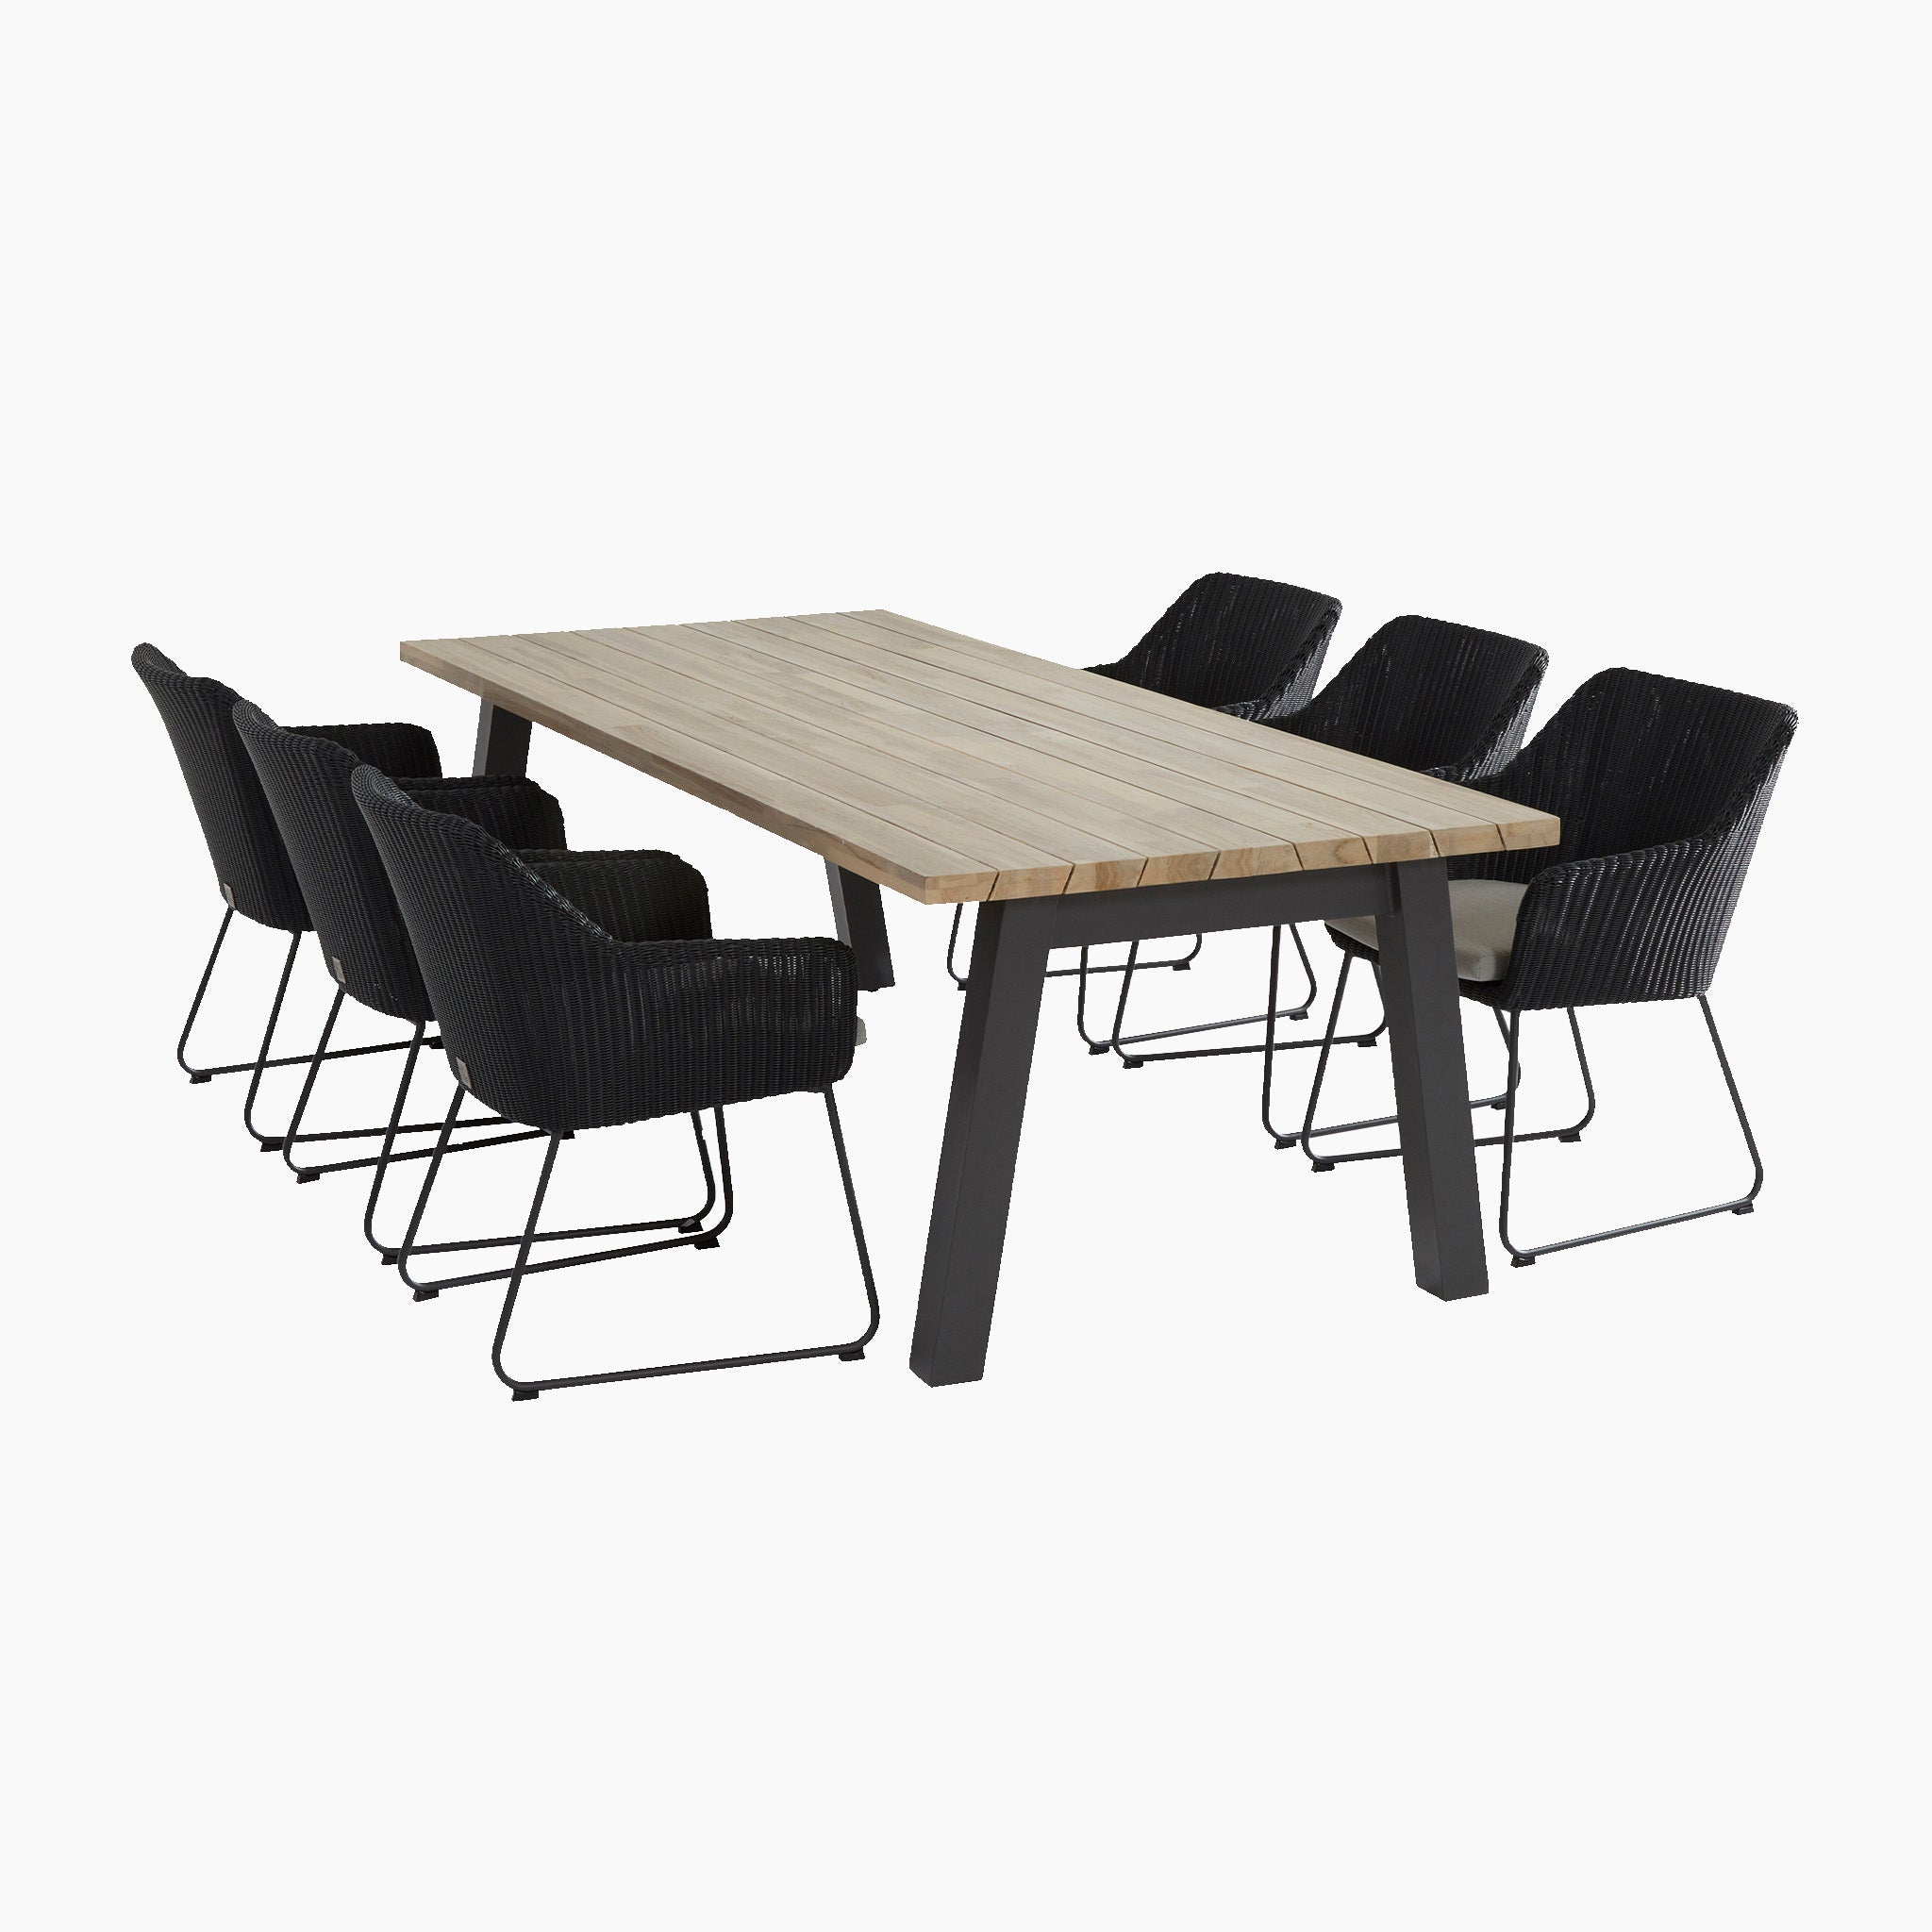 Avila 6 Seat Rectangular Dining with Teak Table in Black